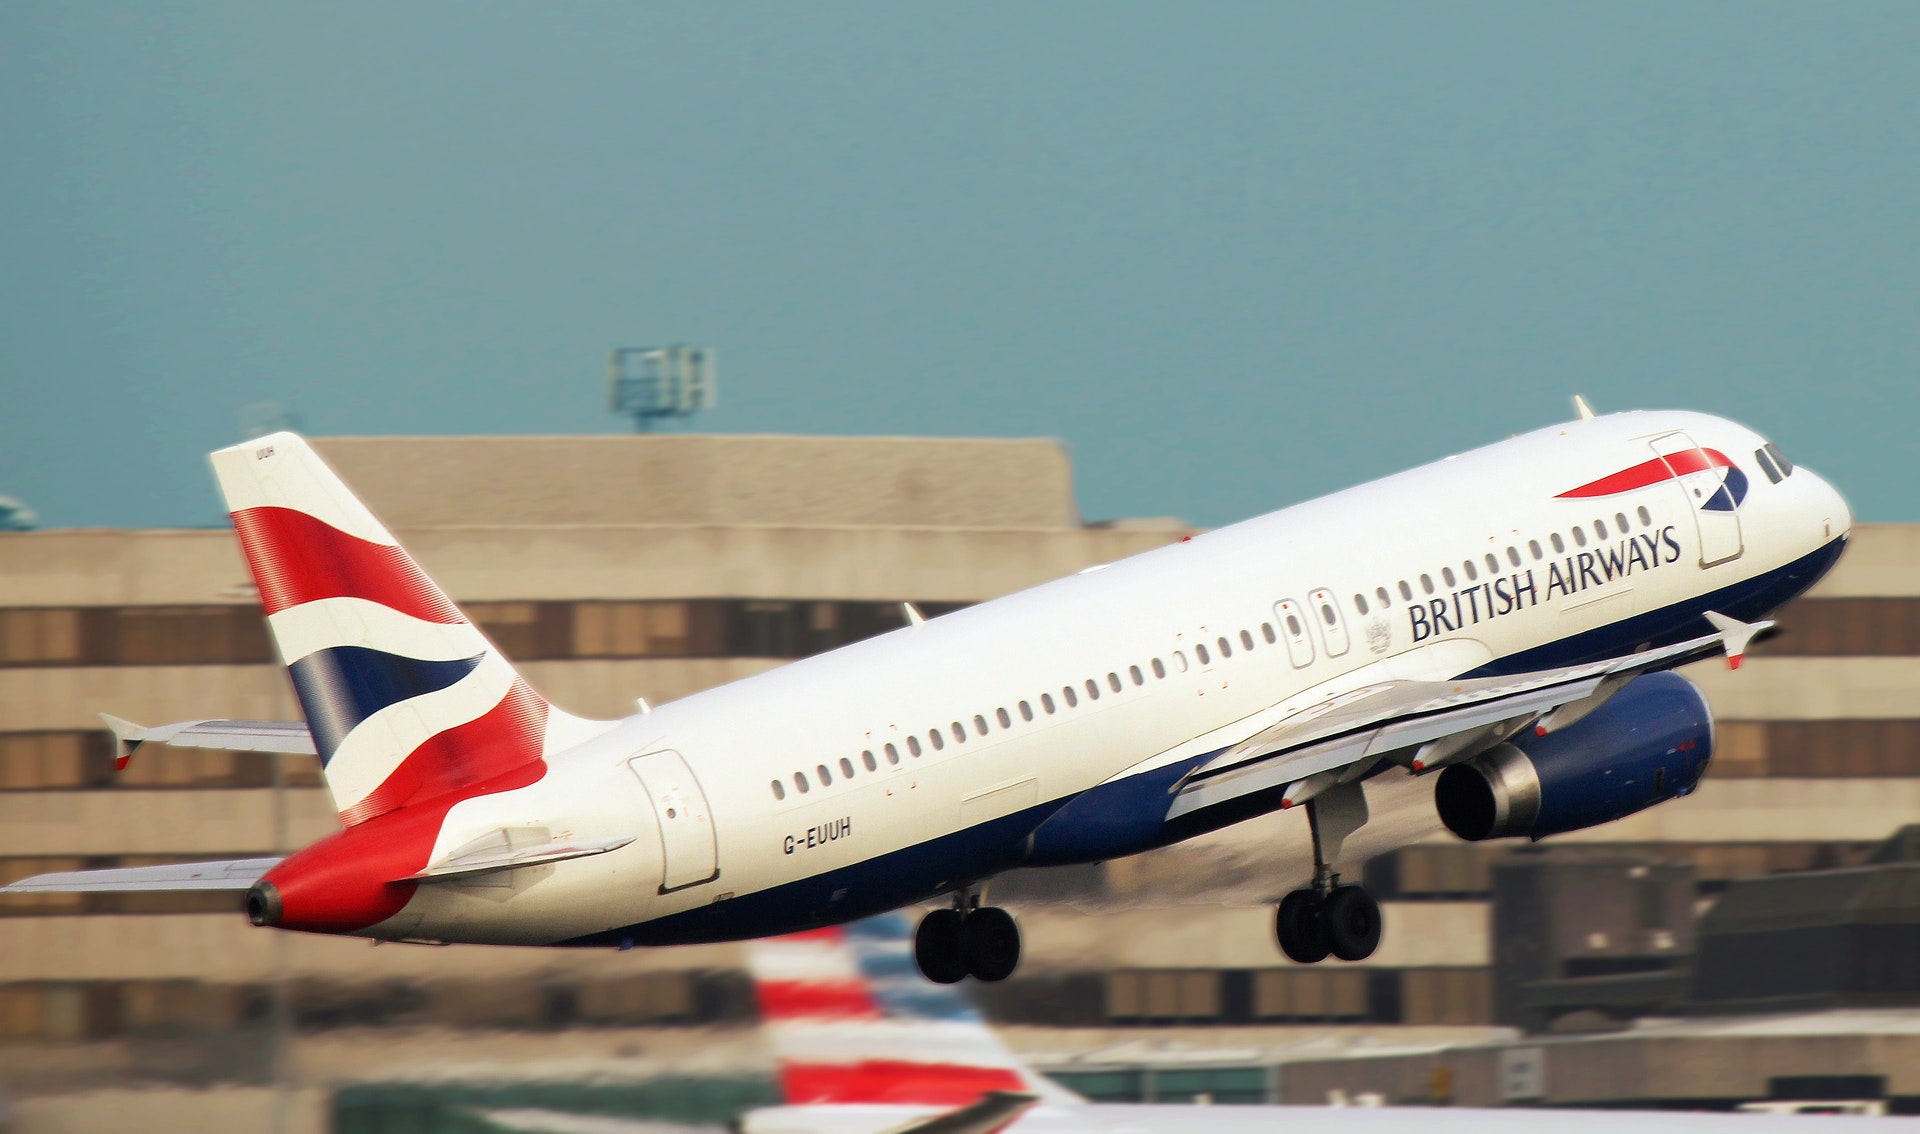 white british airways taking off the runway 164589 - Travel Radar - Aviation News